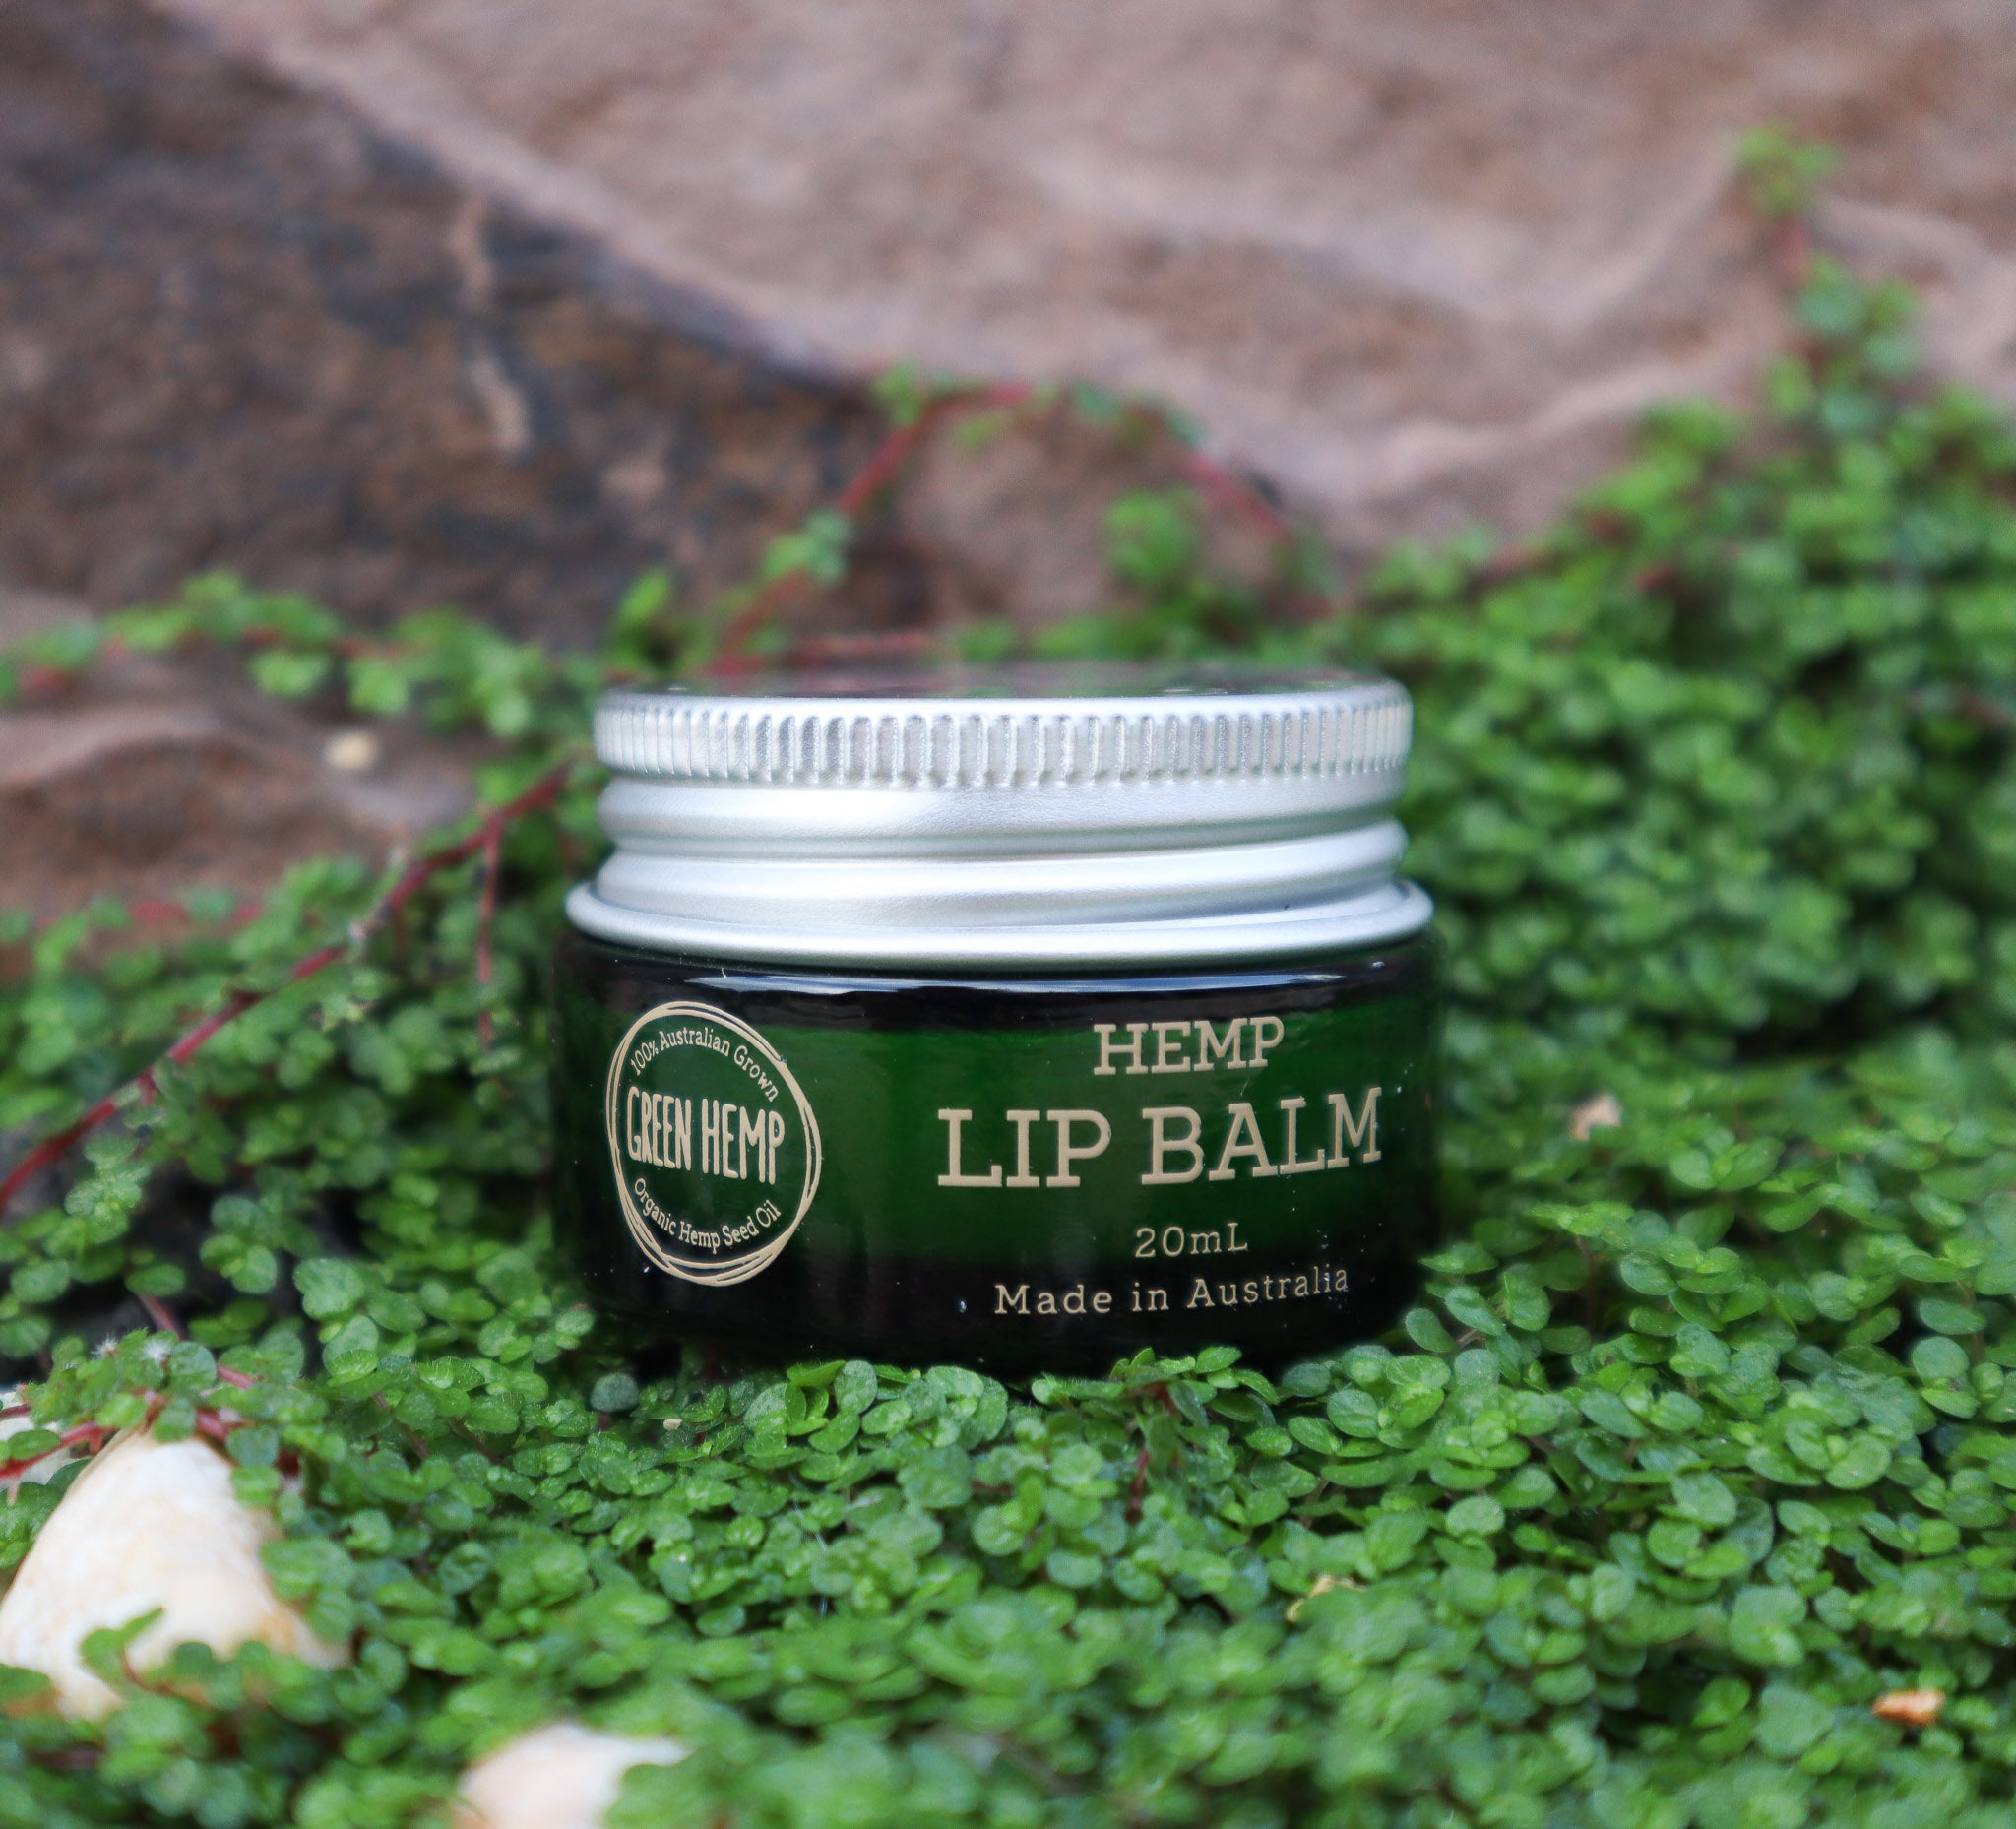 Lip Balm - GREEN HEMP AUSTRALIA  